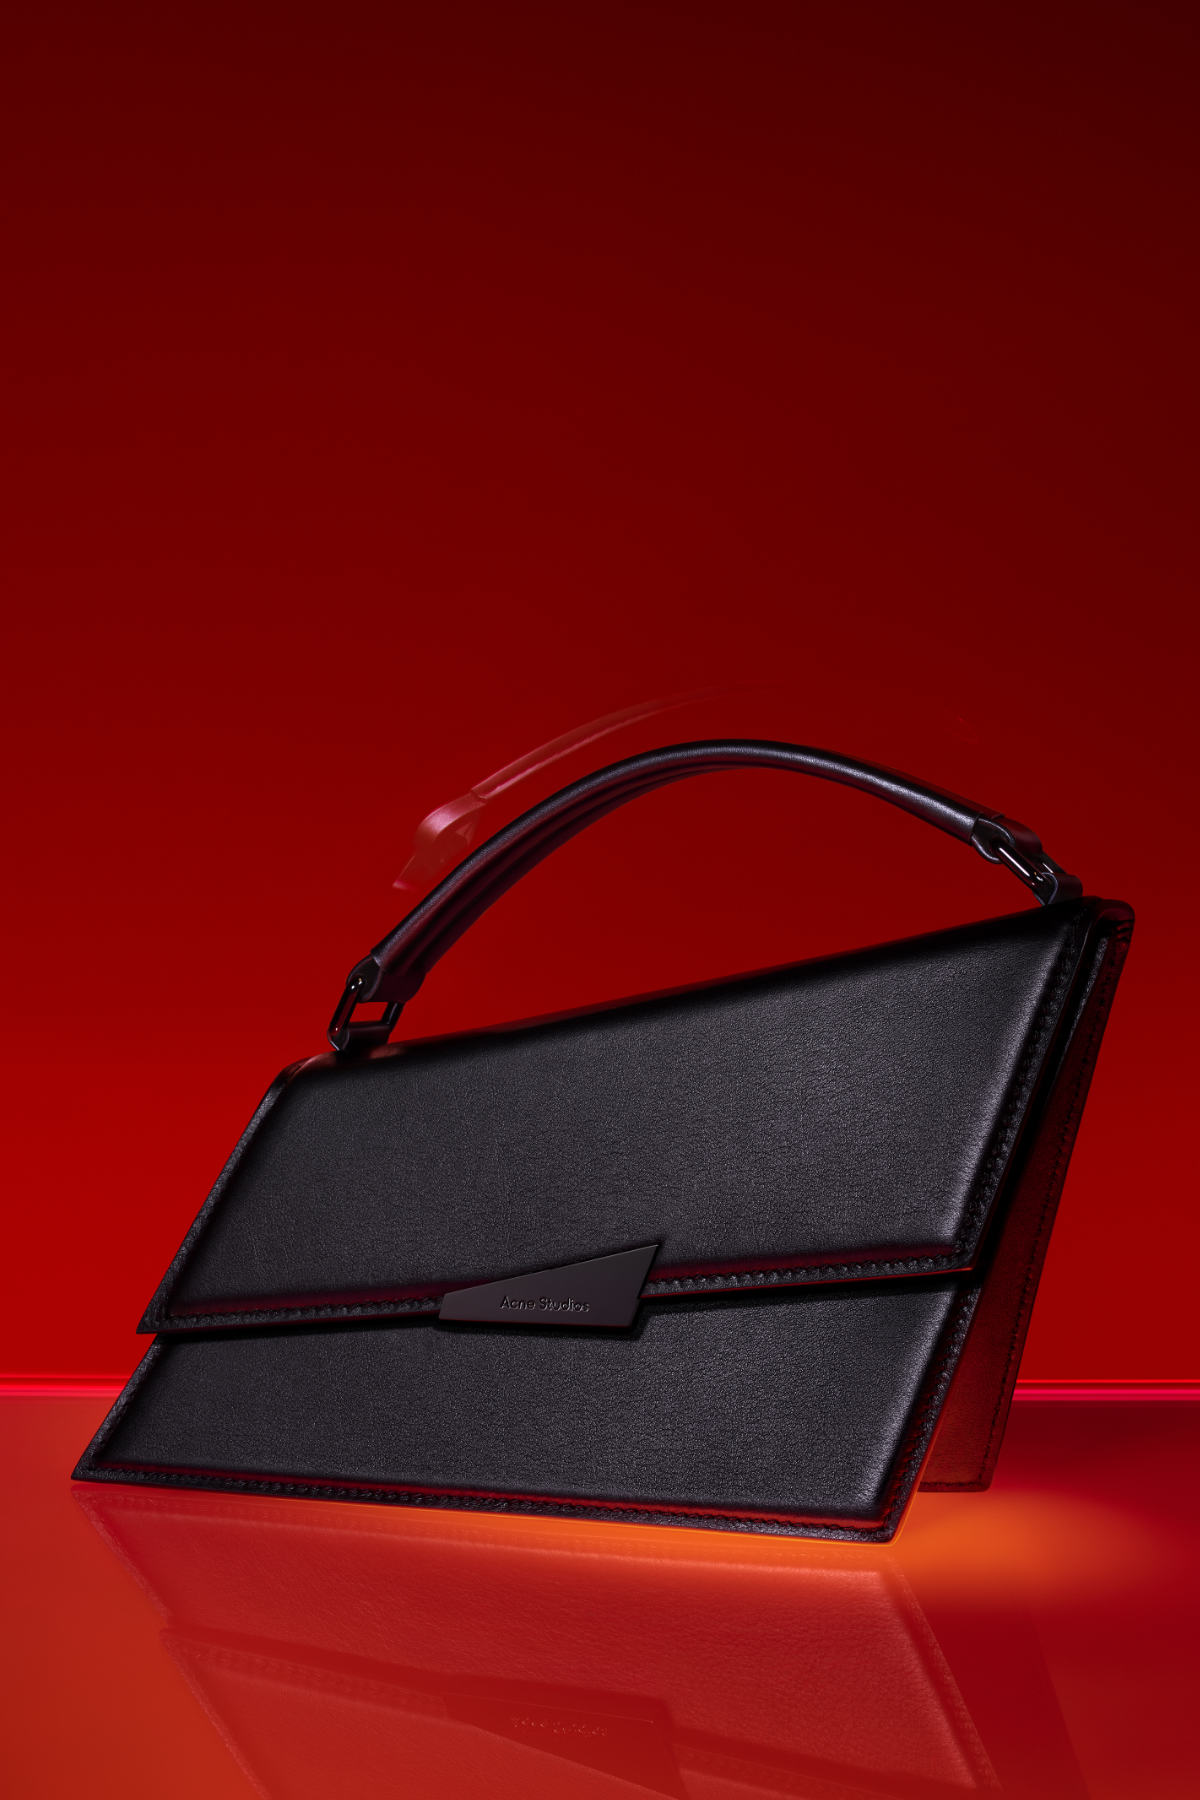 Odd Shaped “Thing” Bags Trend: What Makes A Handbag?